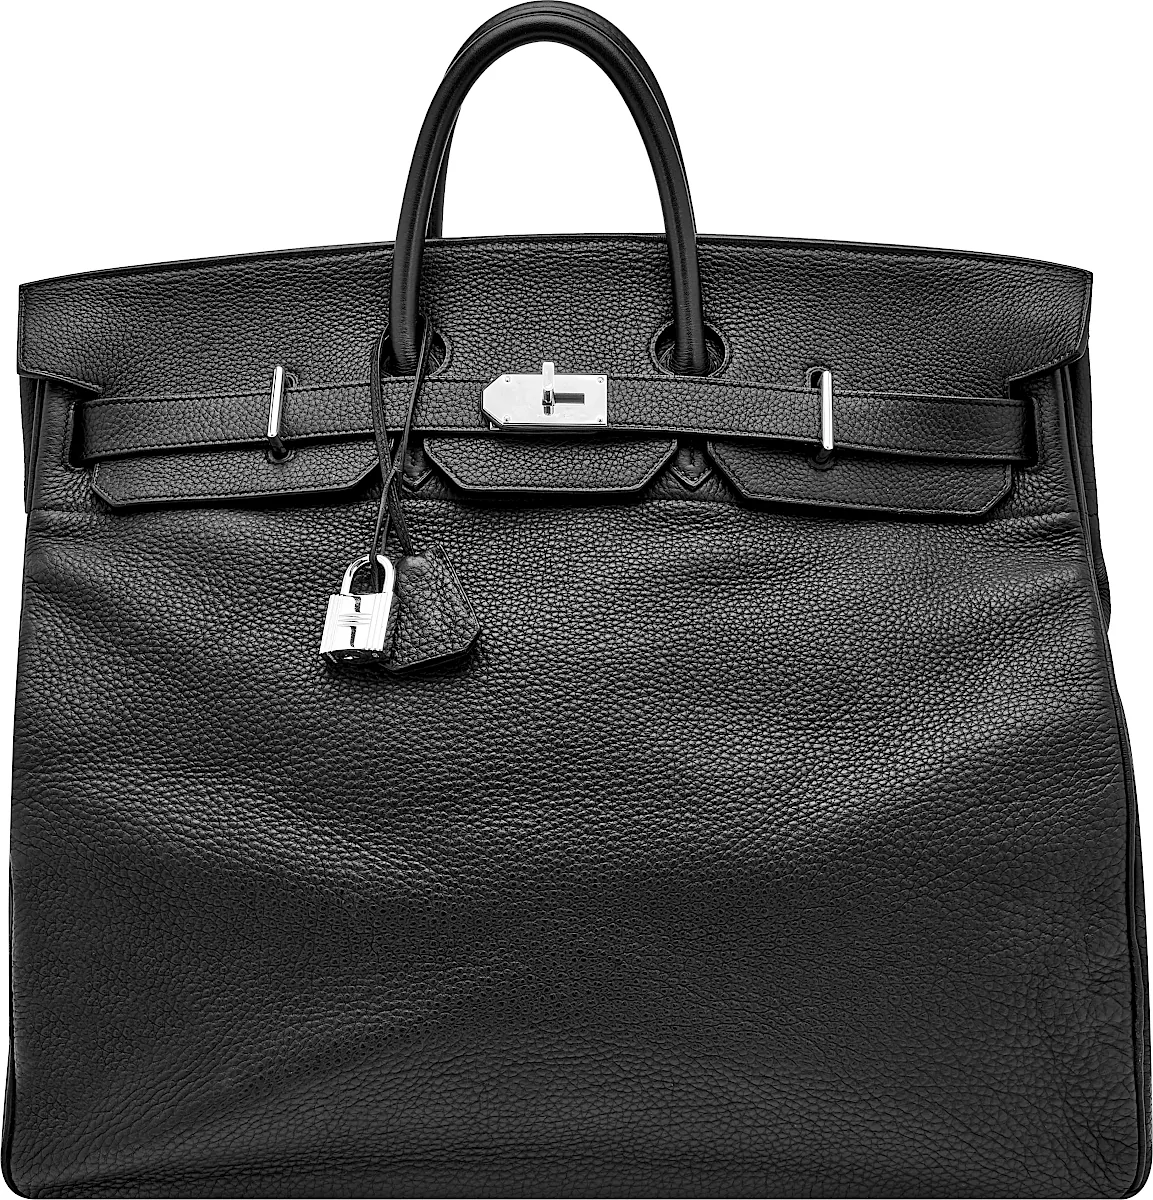 Hermes Black Leather Hac 50 Birkin Bag